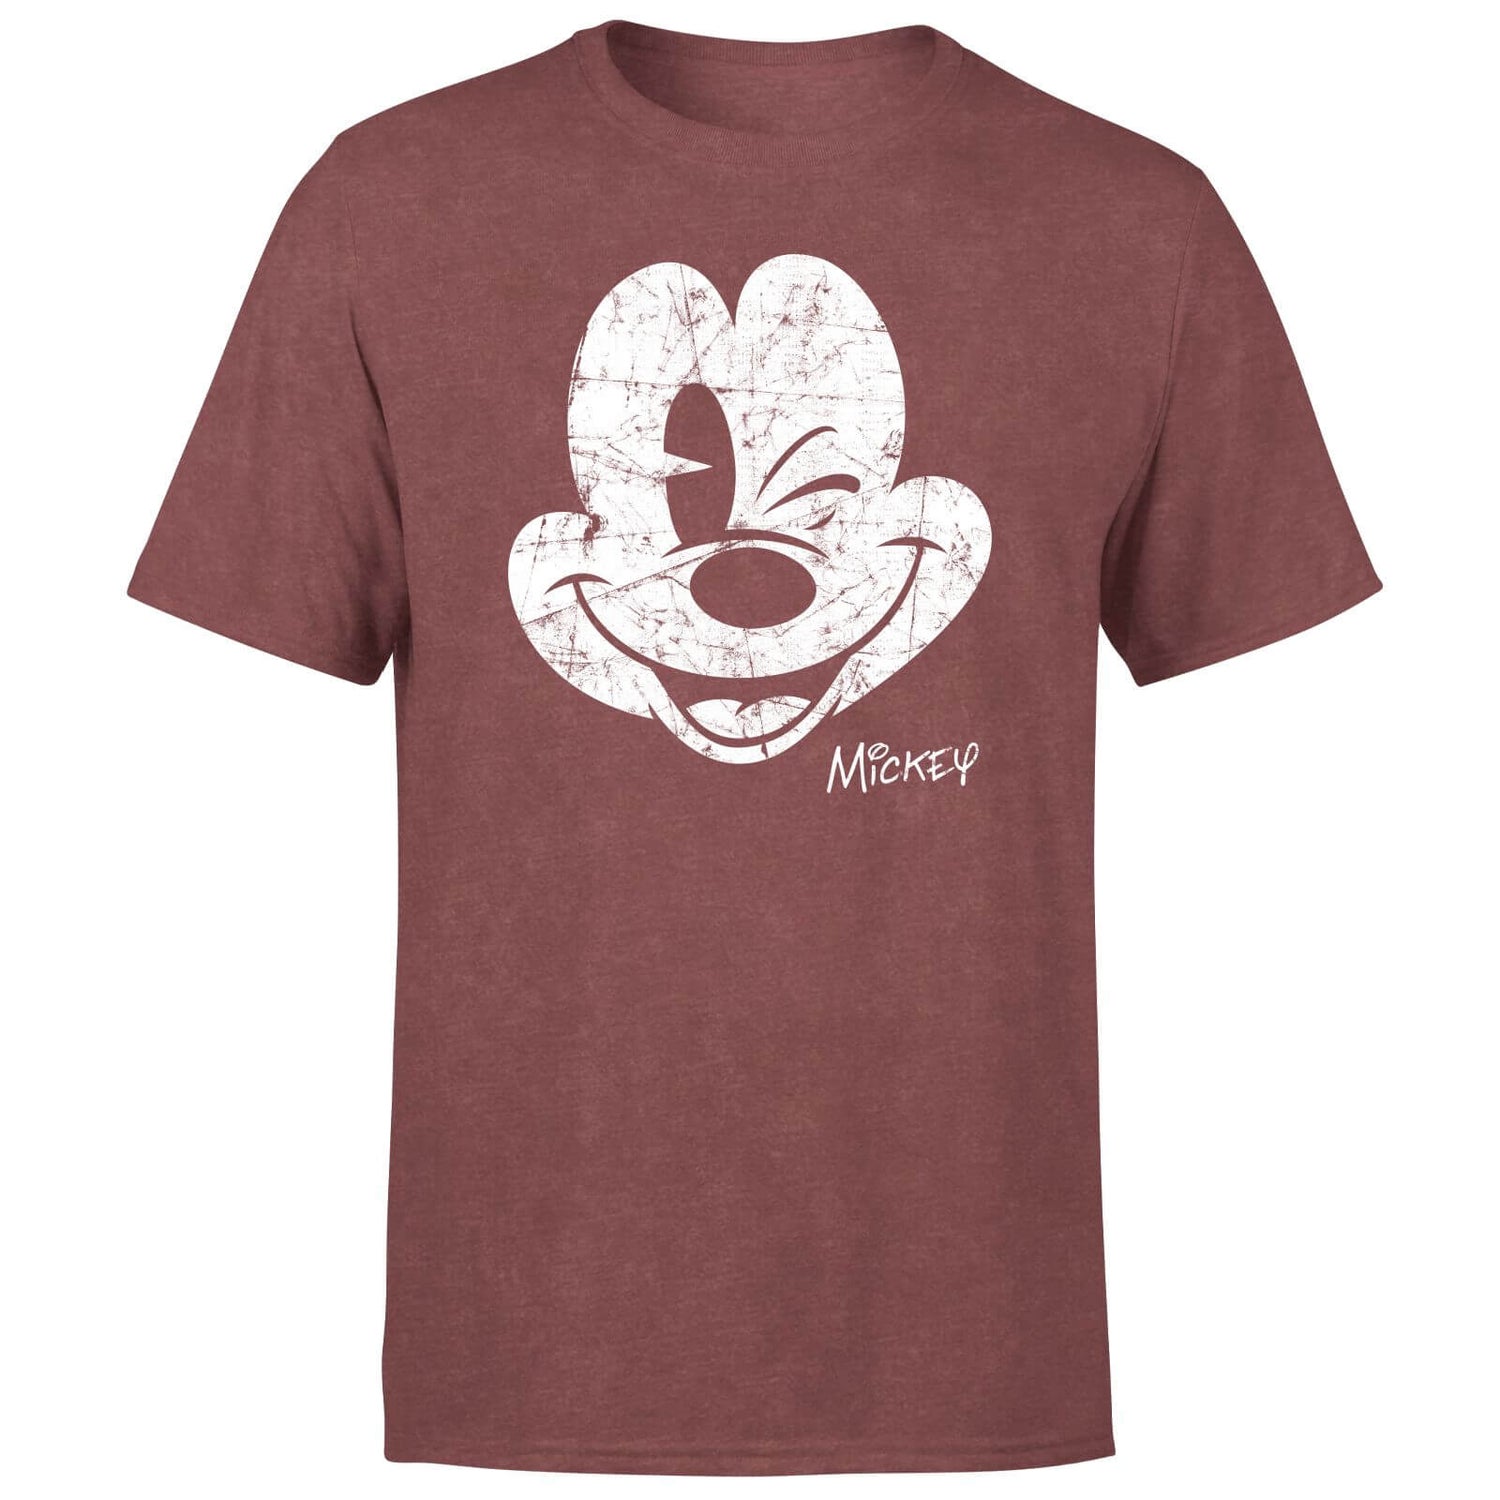 Mickey Mouse Worn Face Men's T-Shirt - Burgundy Acid Wash